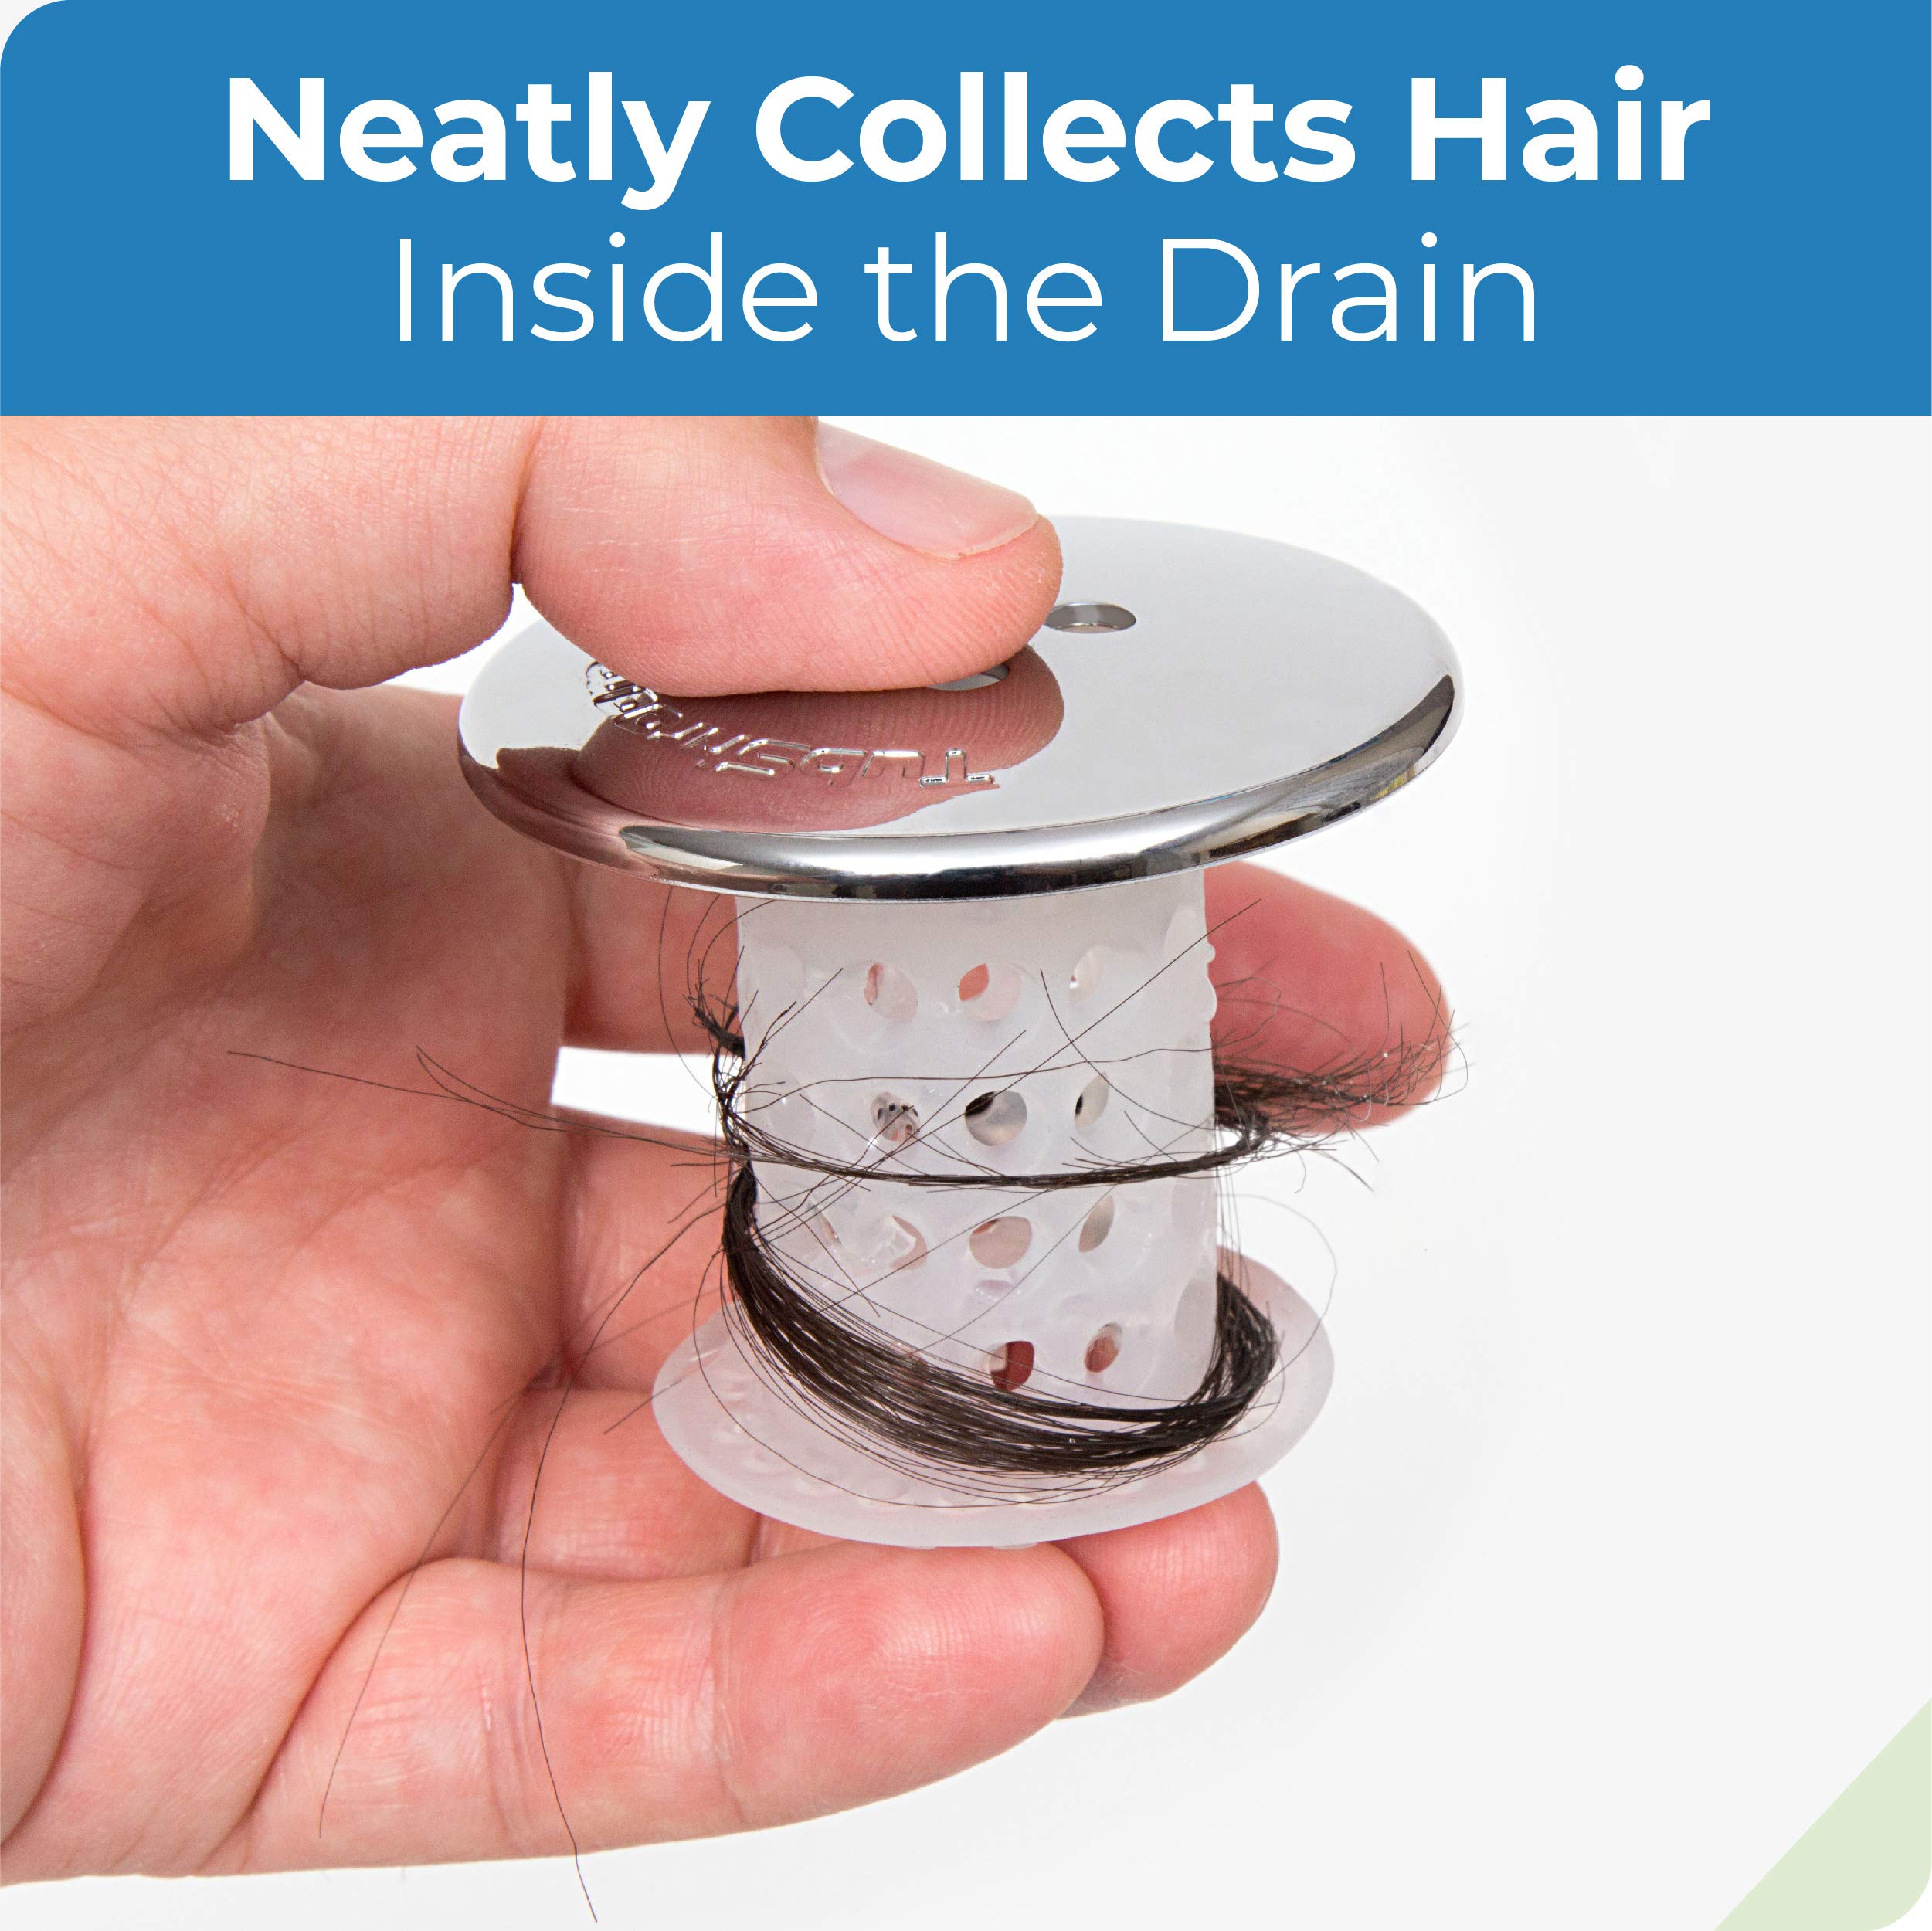 TubShroom Tub Drain Hair Catcher, 2 Pack, Chrome – Drain Protector and Hair Catcher for Bathroom Drains, Fits 1.5” – 1.75” Bathtub and Shower Drains